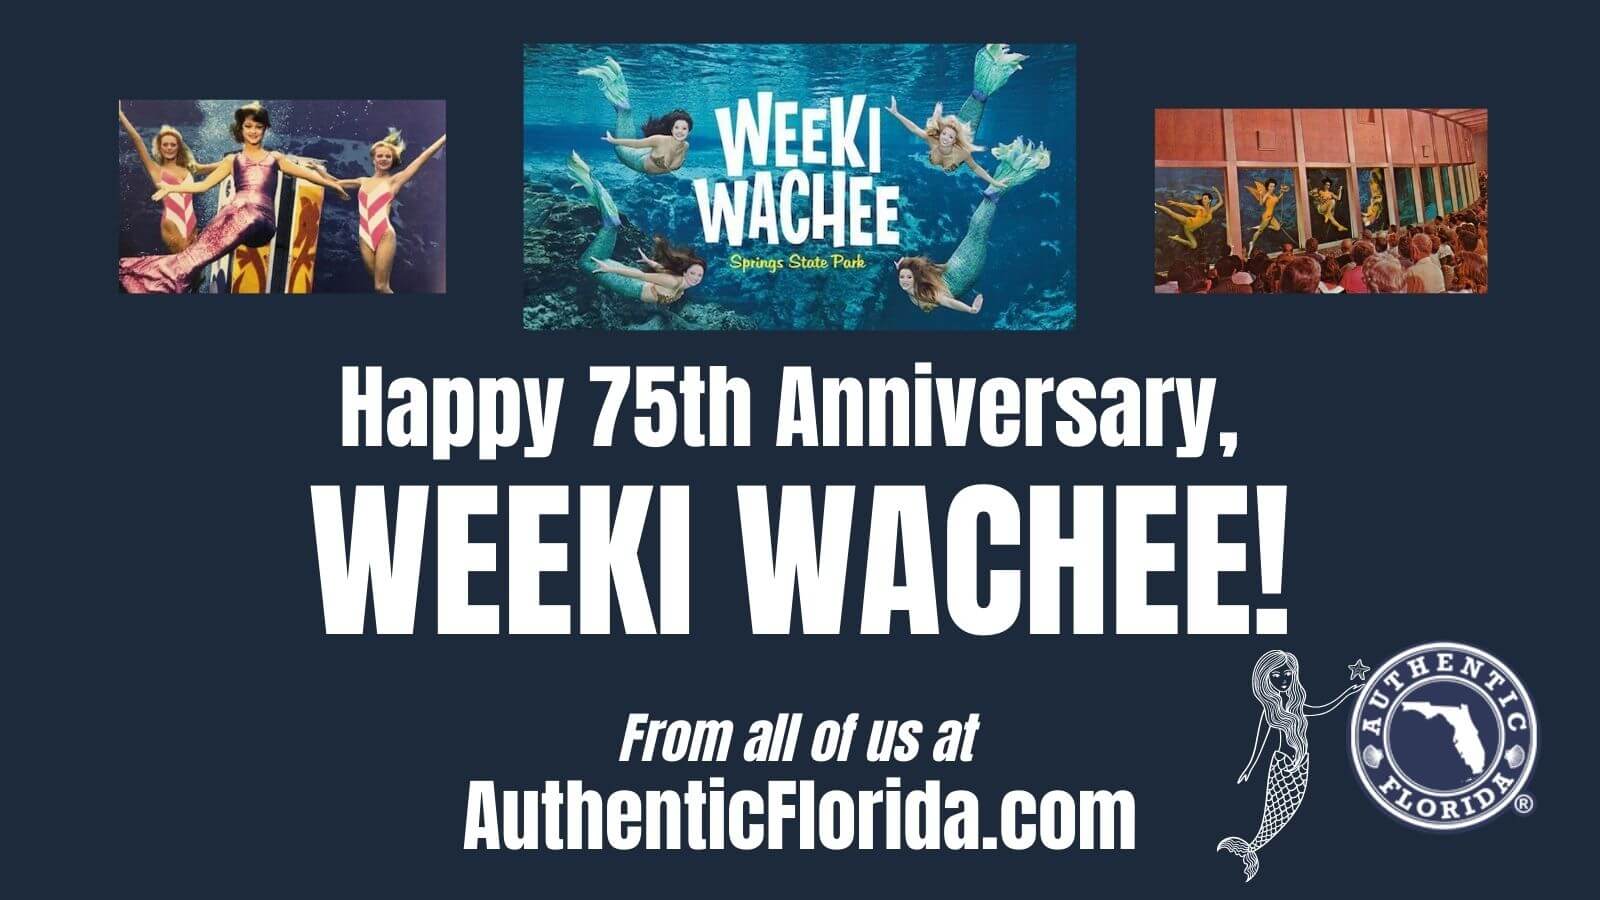 Weeki Wachee 75 anniversary promotional flyer. 